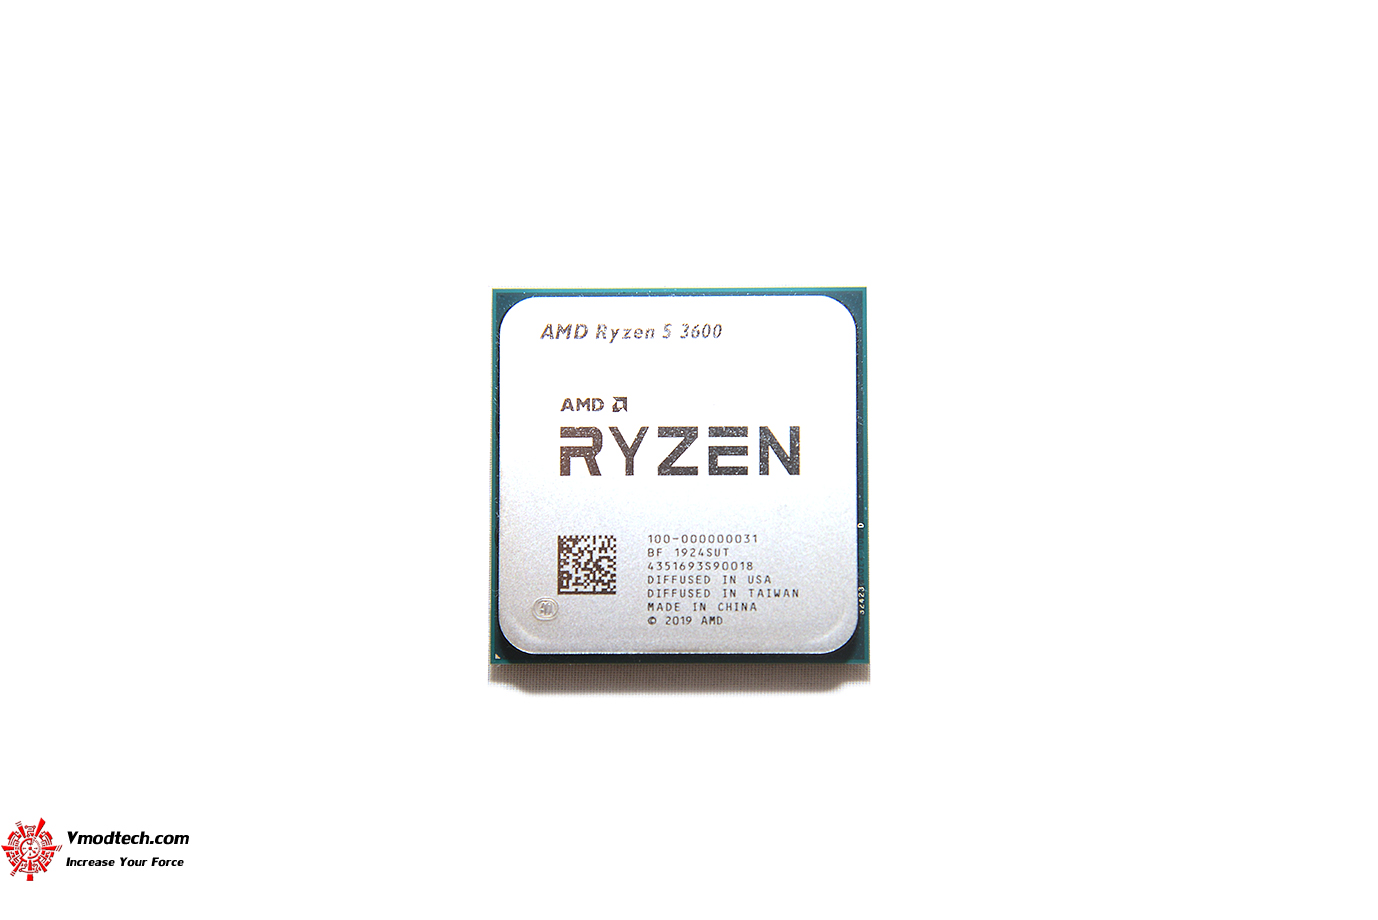 Ryzen 5 3600g. AMD Ryzen 5 3600 OEM. Процессор AMD Ryazan 5 3600. АМД райзен 5 3600 6 Core Processor. Наклейка AMD Ryzen 5 3600.